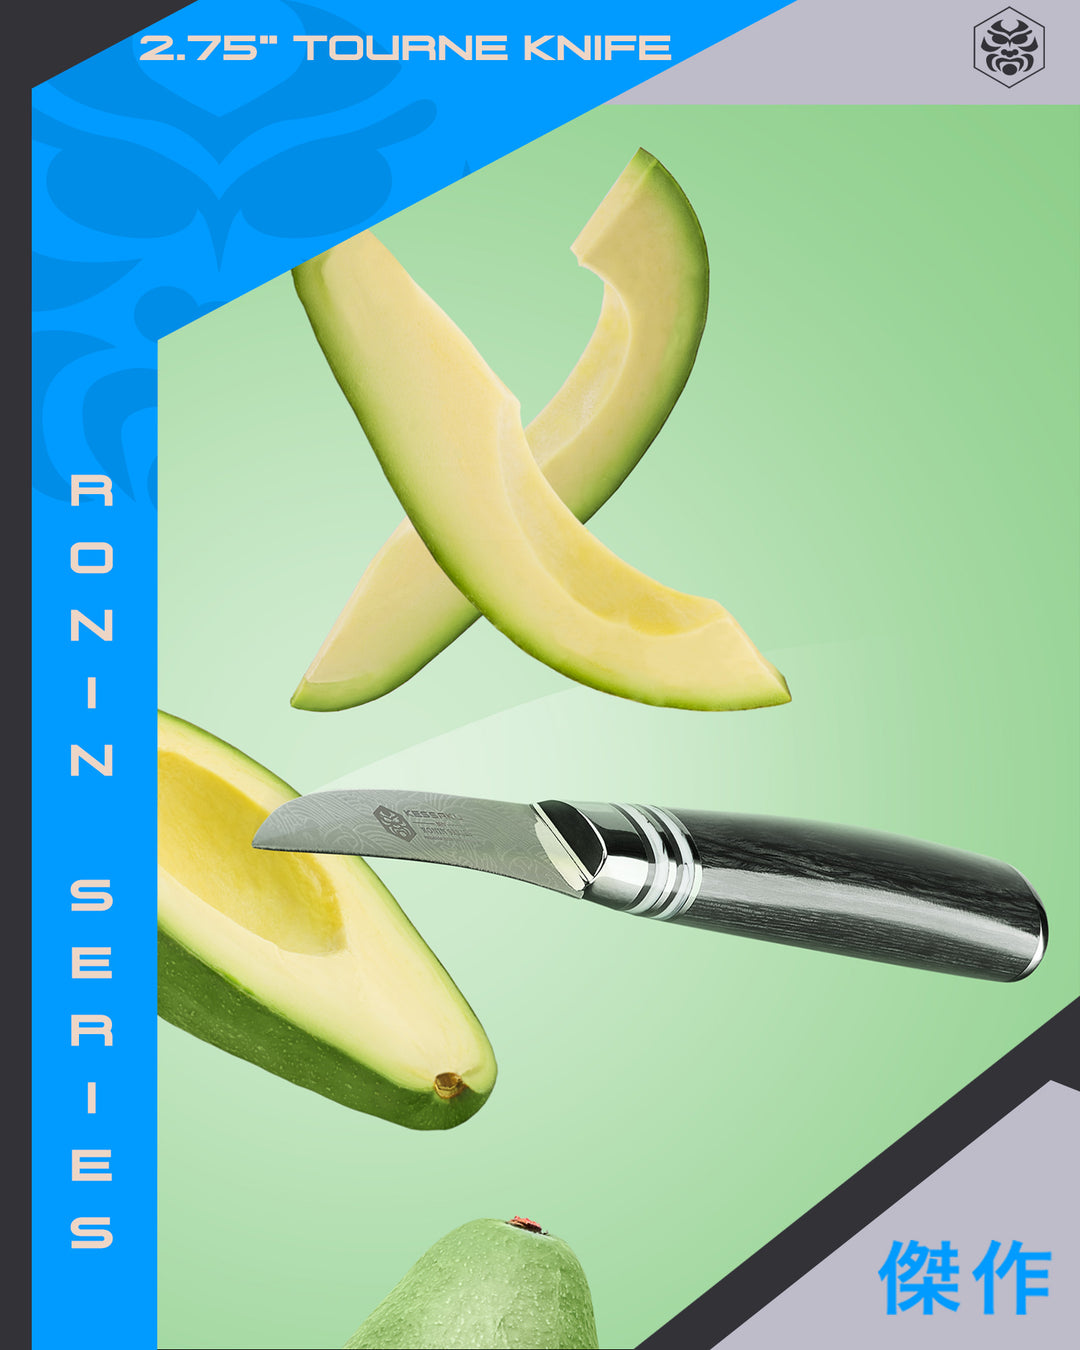 The Ronin Bird's Beak Knife pitting and slicing an avocado.